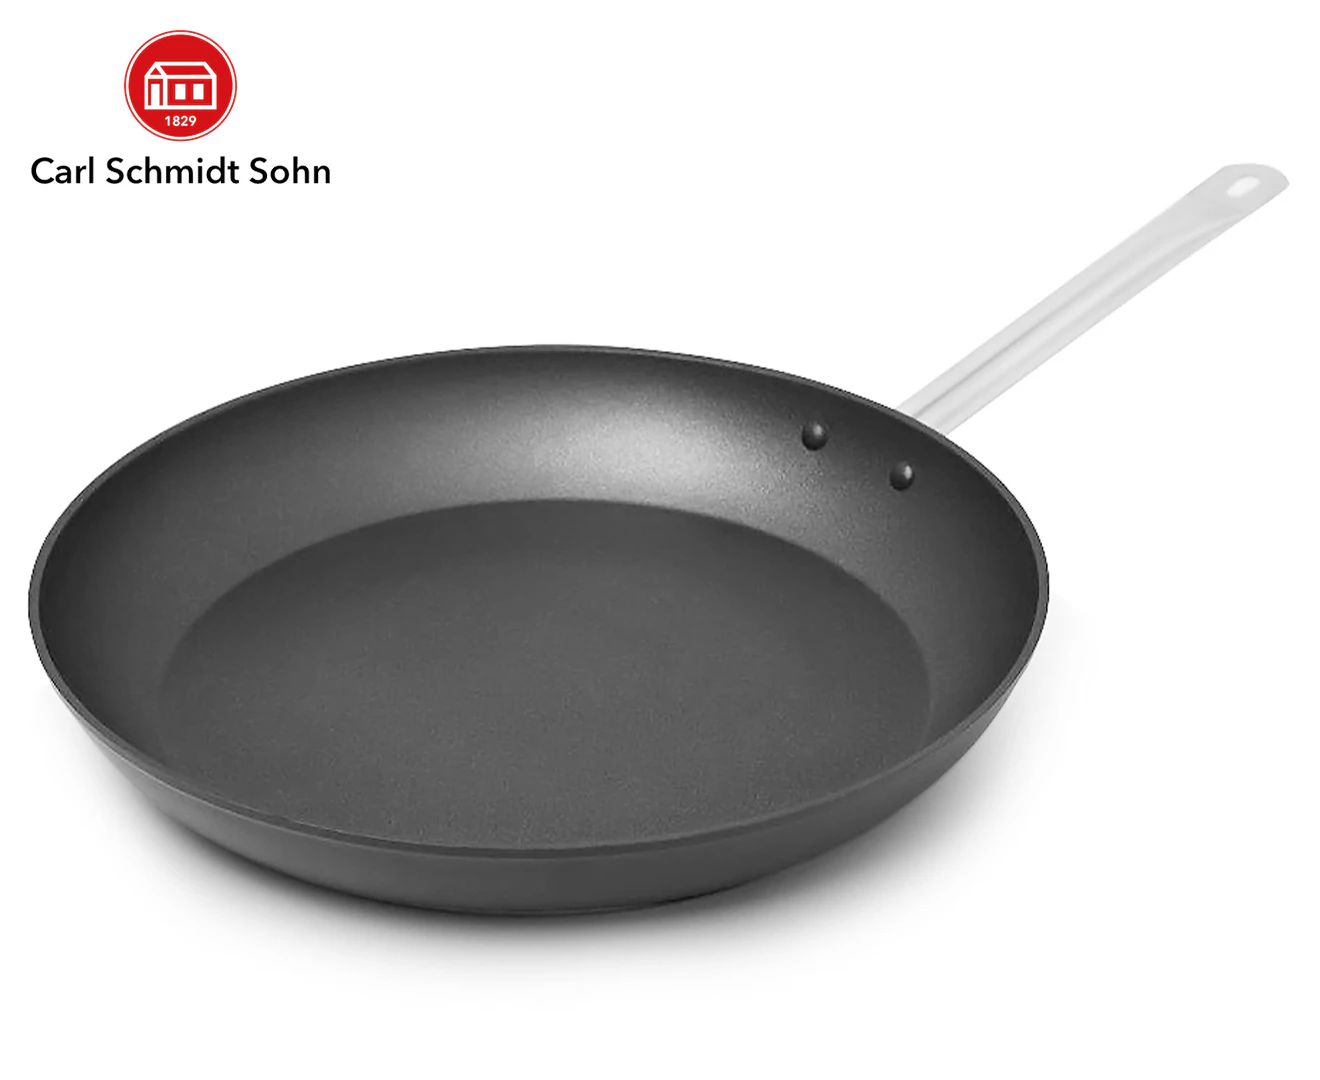 Carl Schmidt Sohn Pro Fry Pan Non-Stick 28cm Solaris